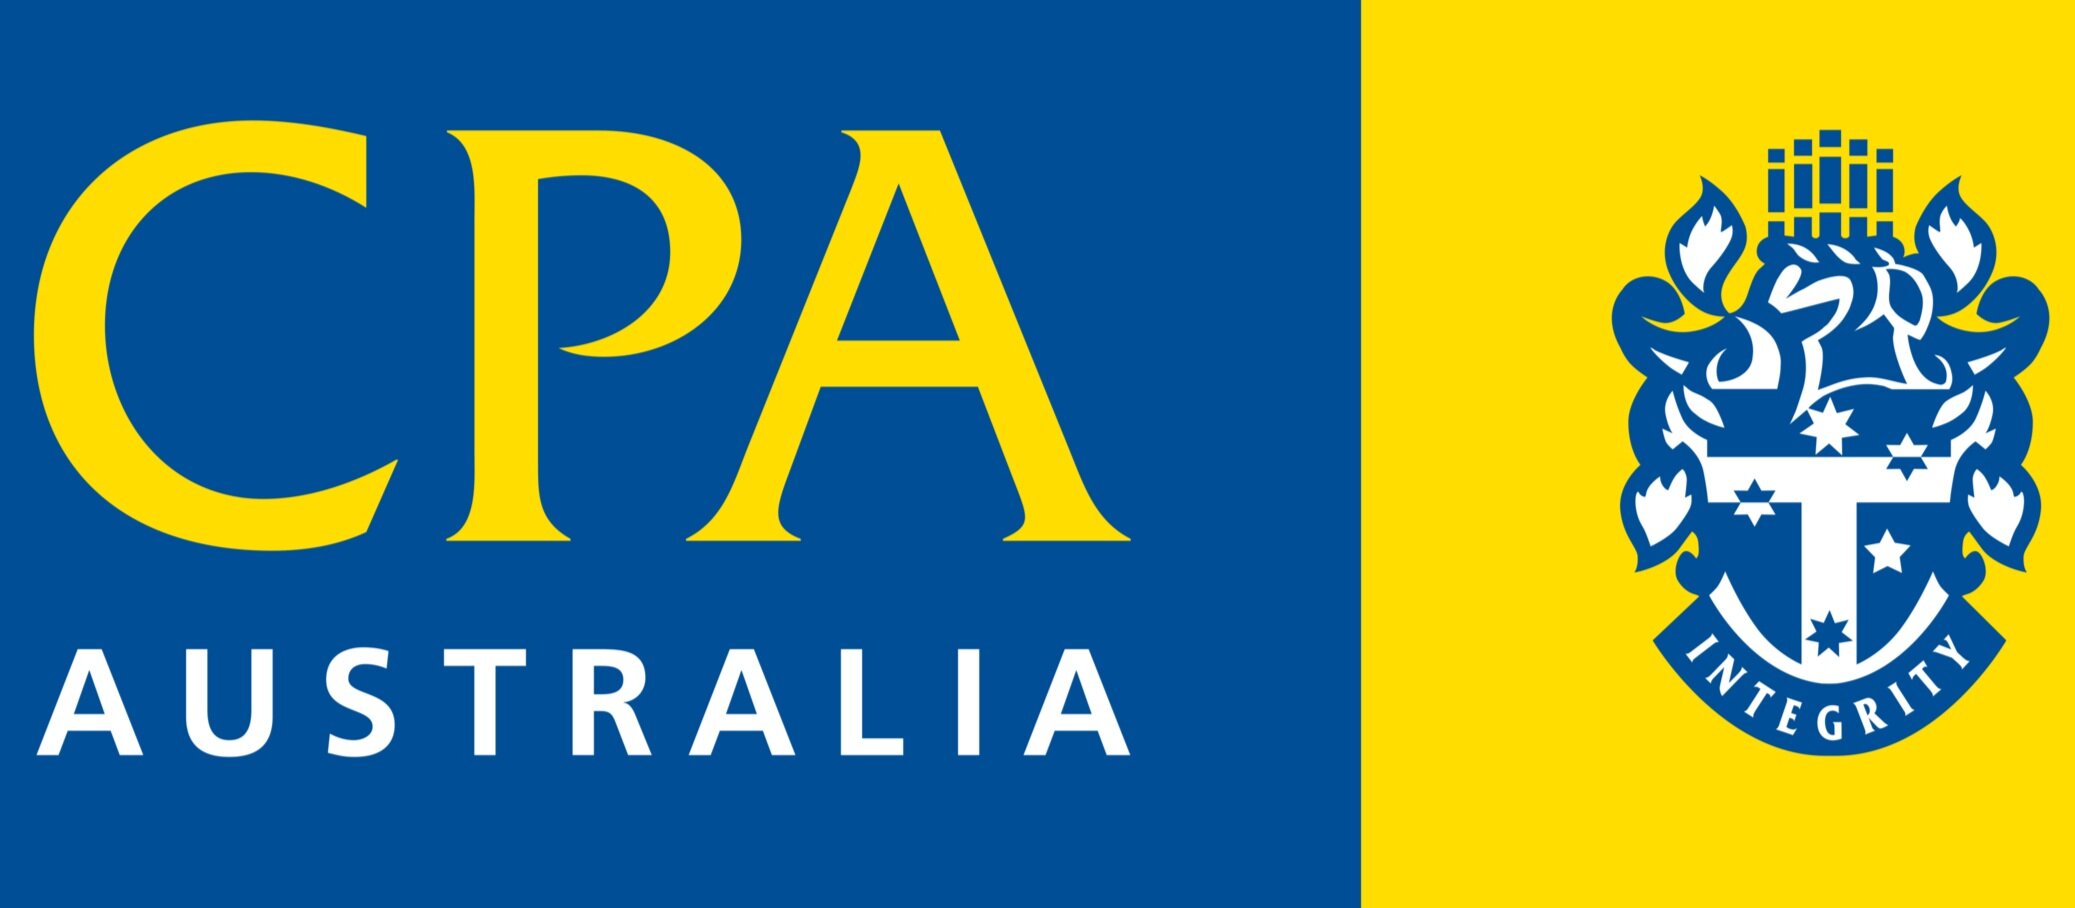 CPA_Australia_Logo.jpg